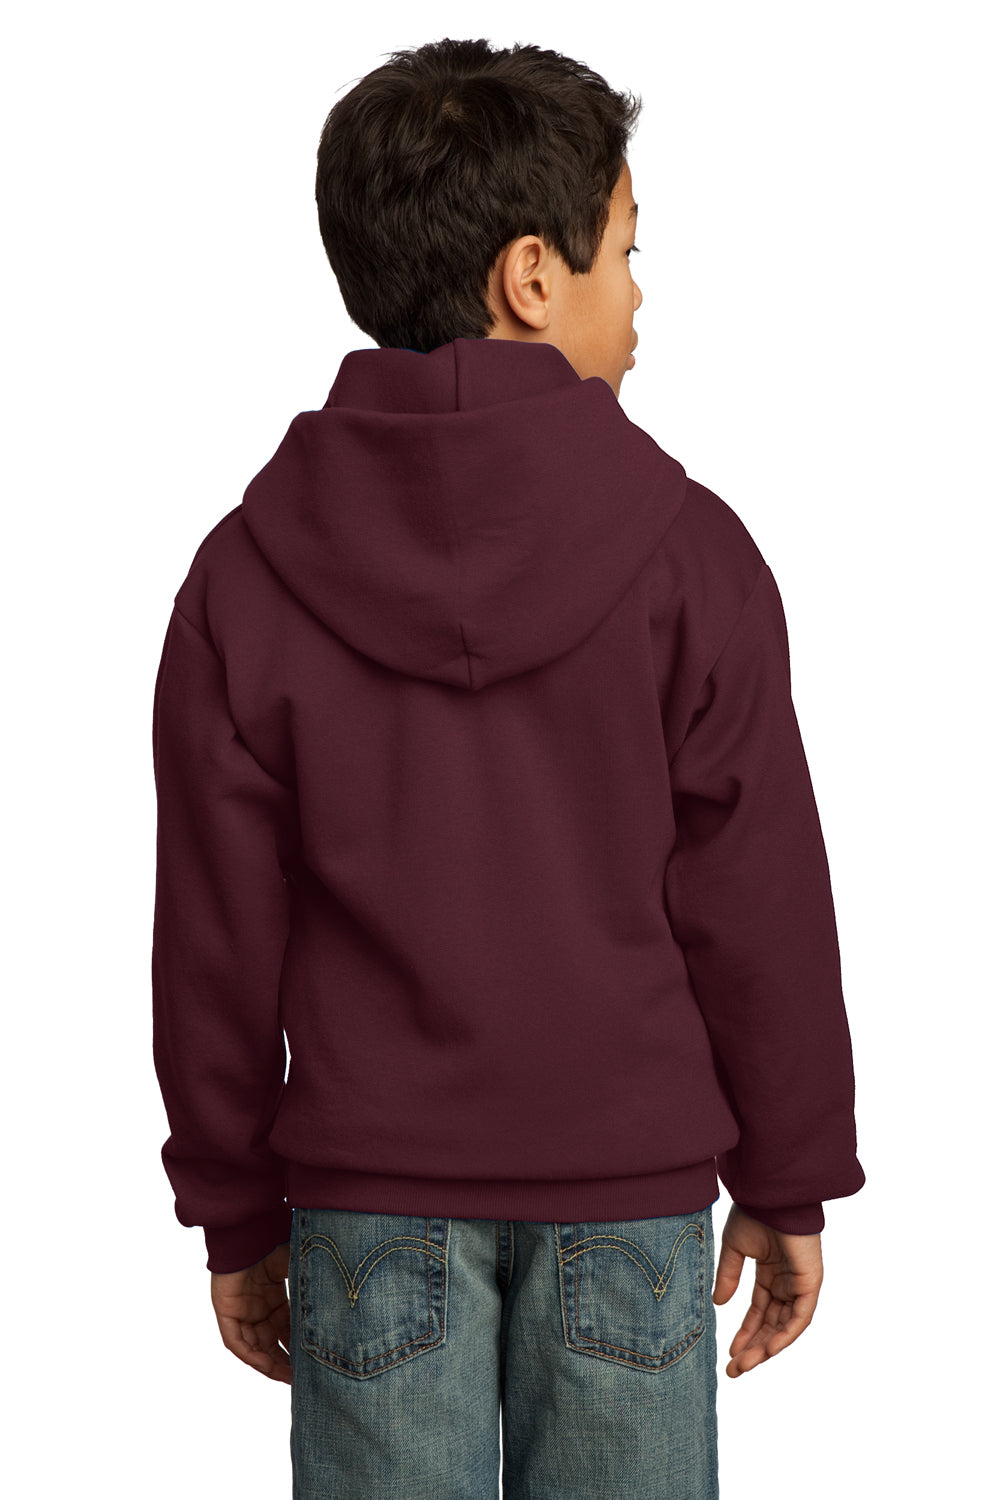 Port & Company PC90YH Youth Core Fleece Hooded Sweatshirt Hoodie Maroon Back